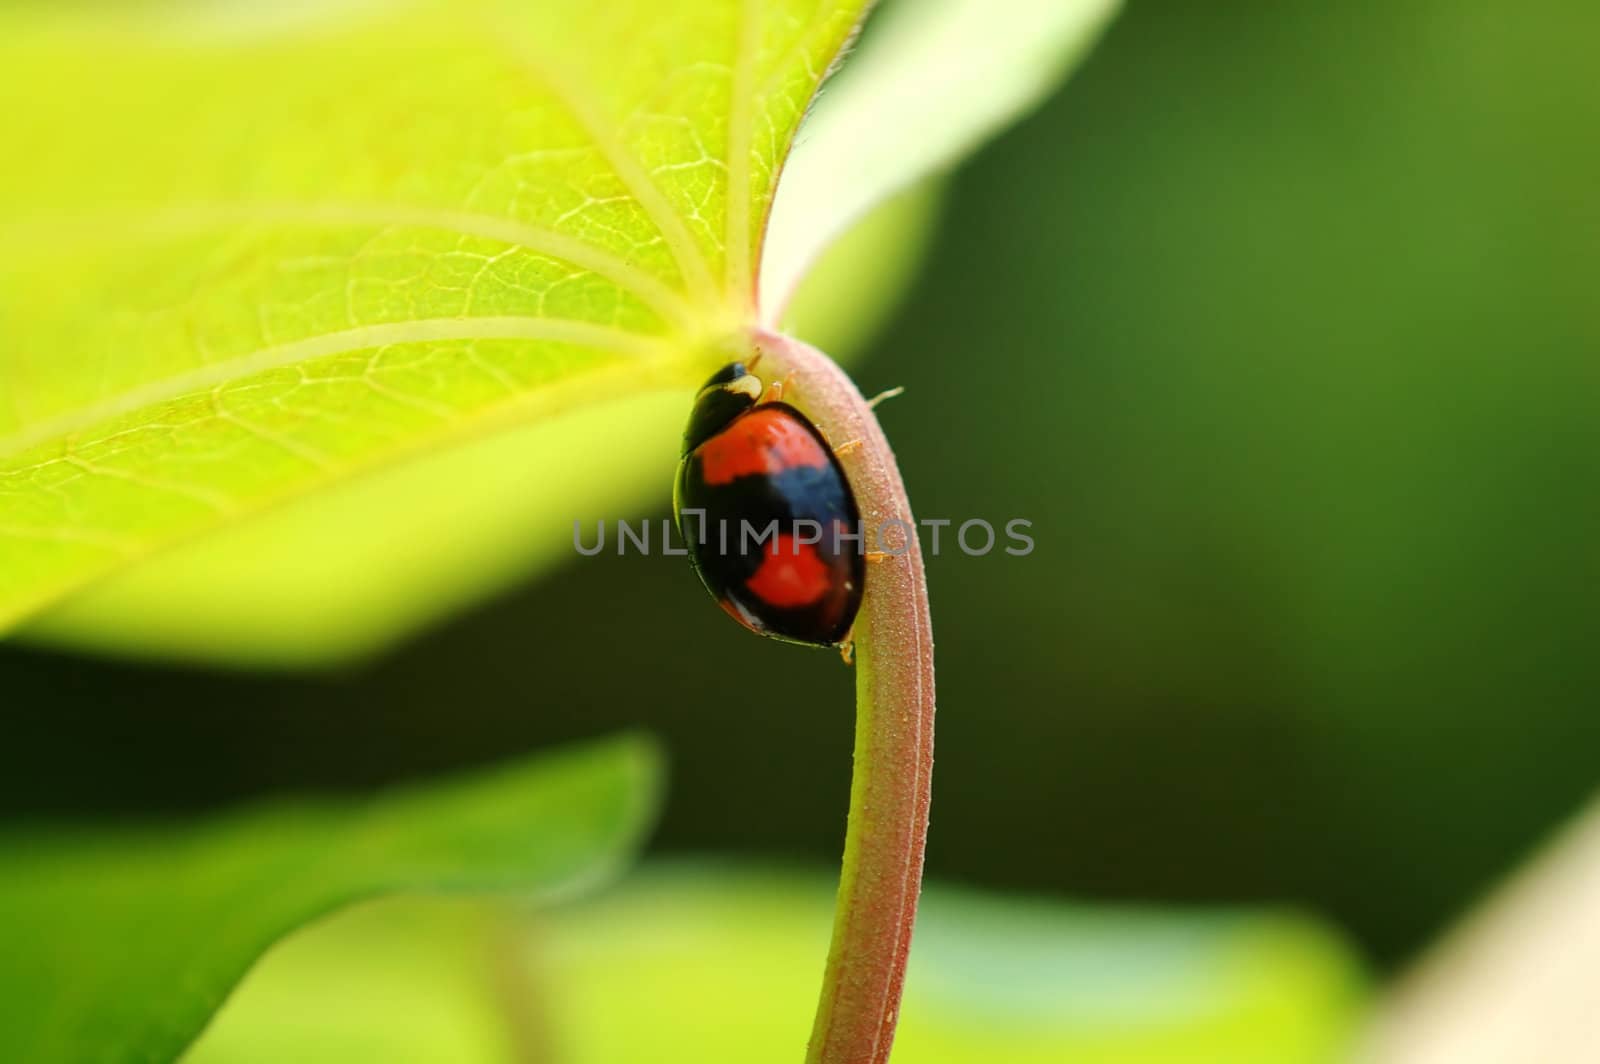 A small ladybird hiding below a leaf